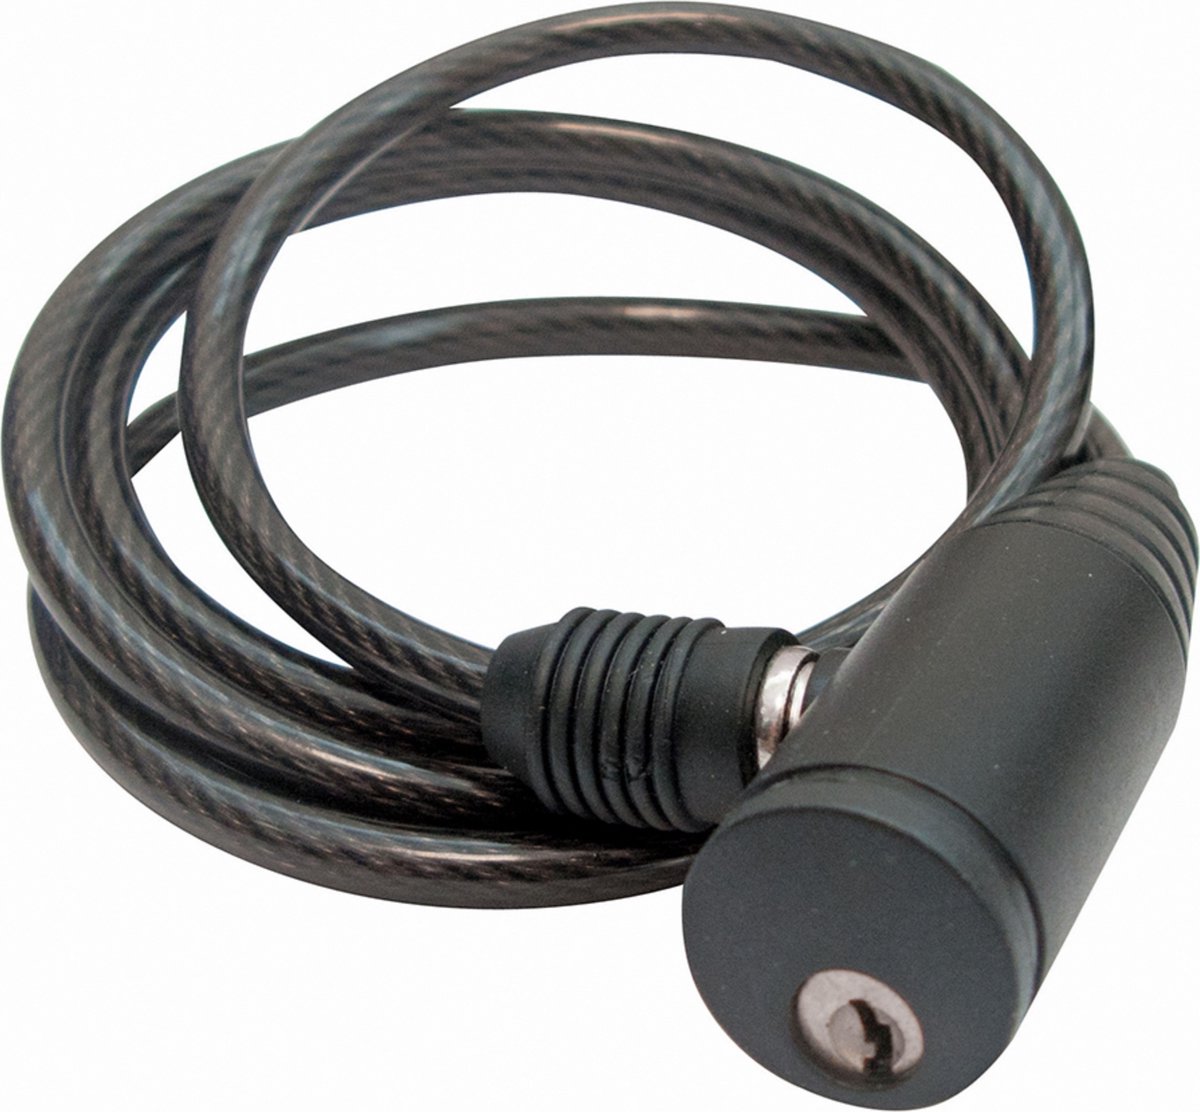 Task Kabelslot met Beugel - 1000 x Ø 6 mm